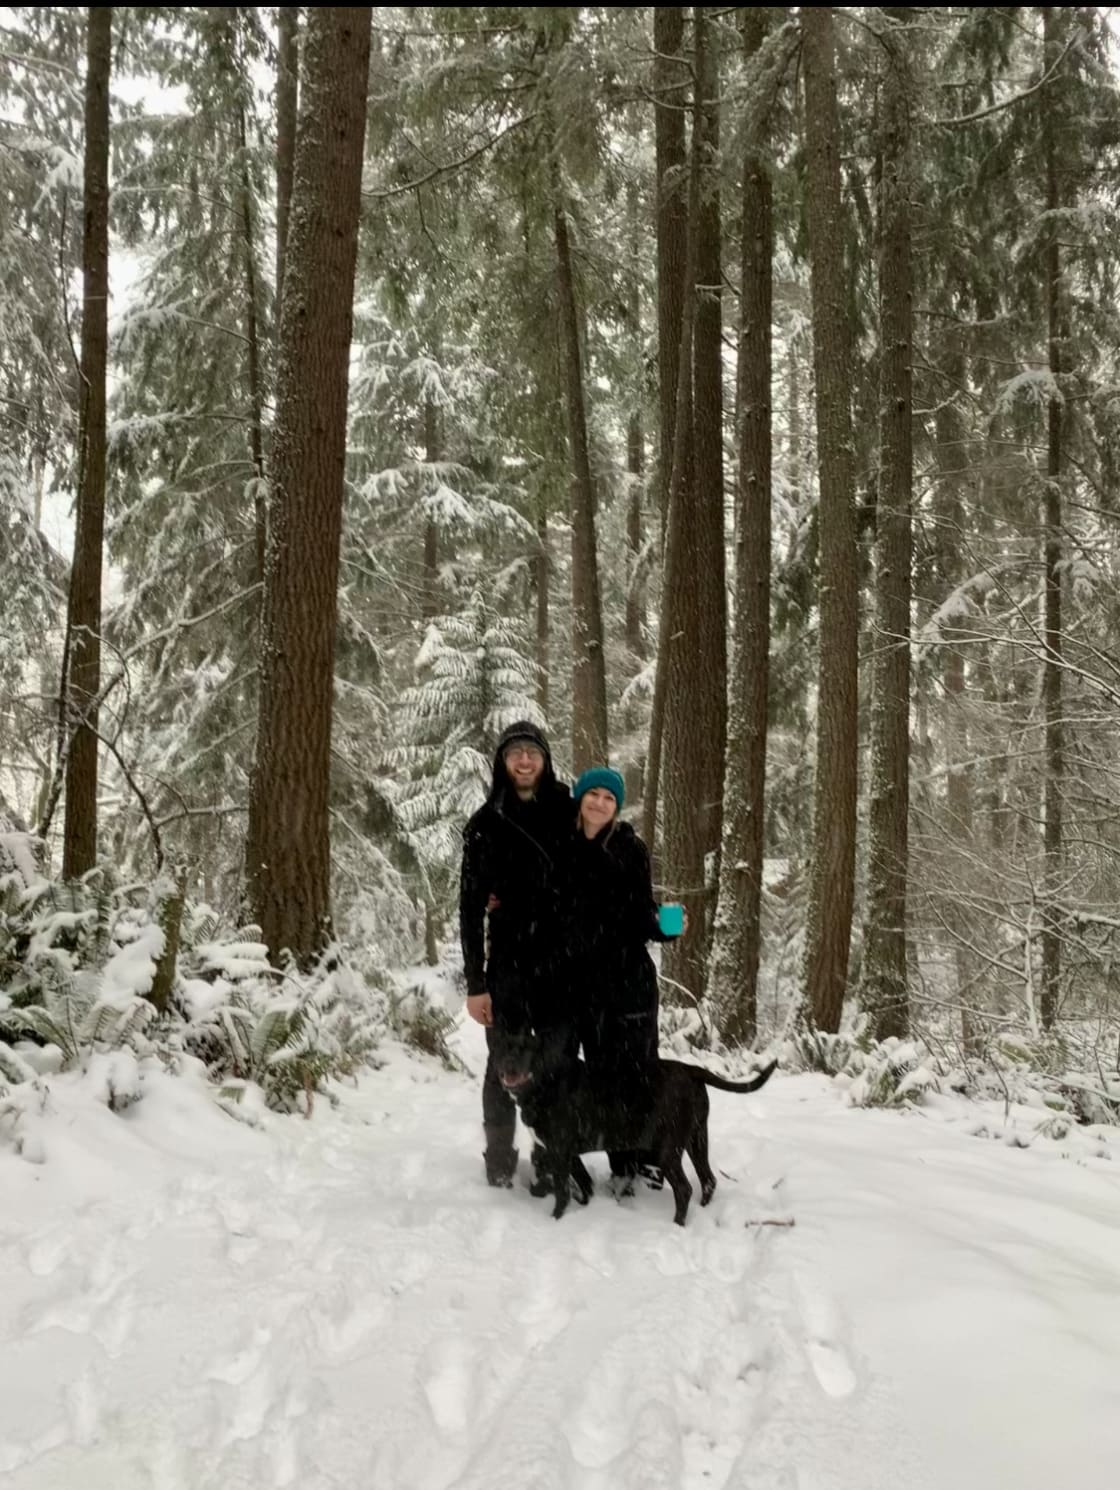 Lovely guests & doggo.. enjoying winter wonderland during snowstorm (2/12 through 2/14, 2021), Valentine's Day!